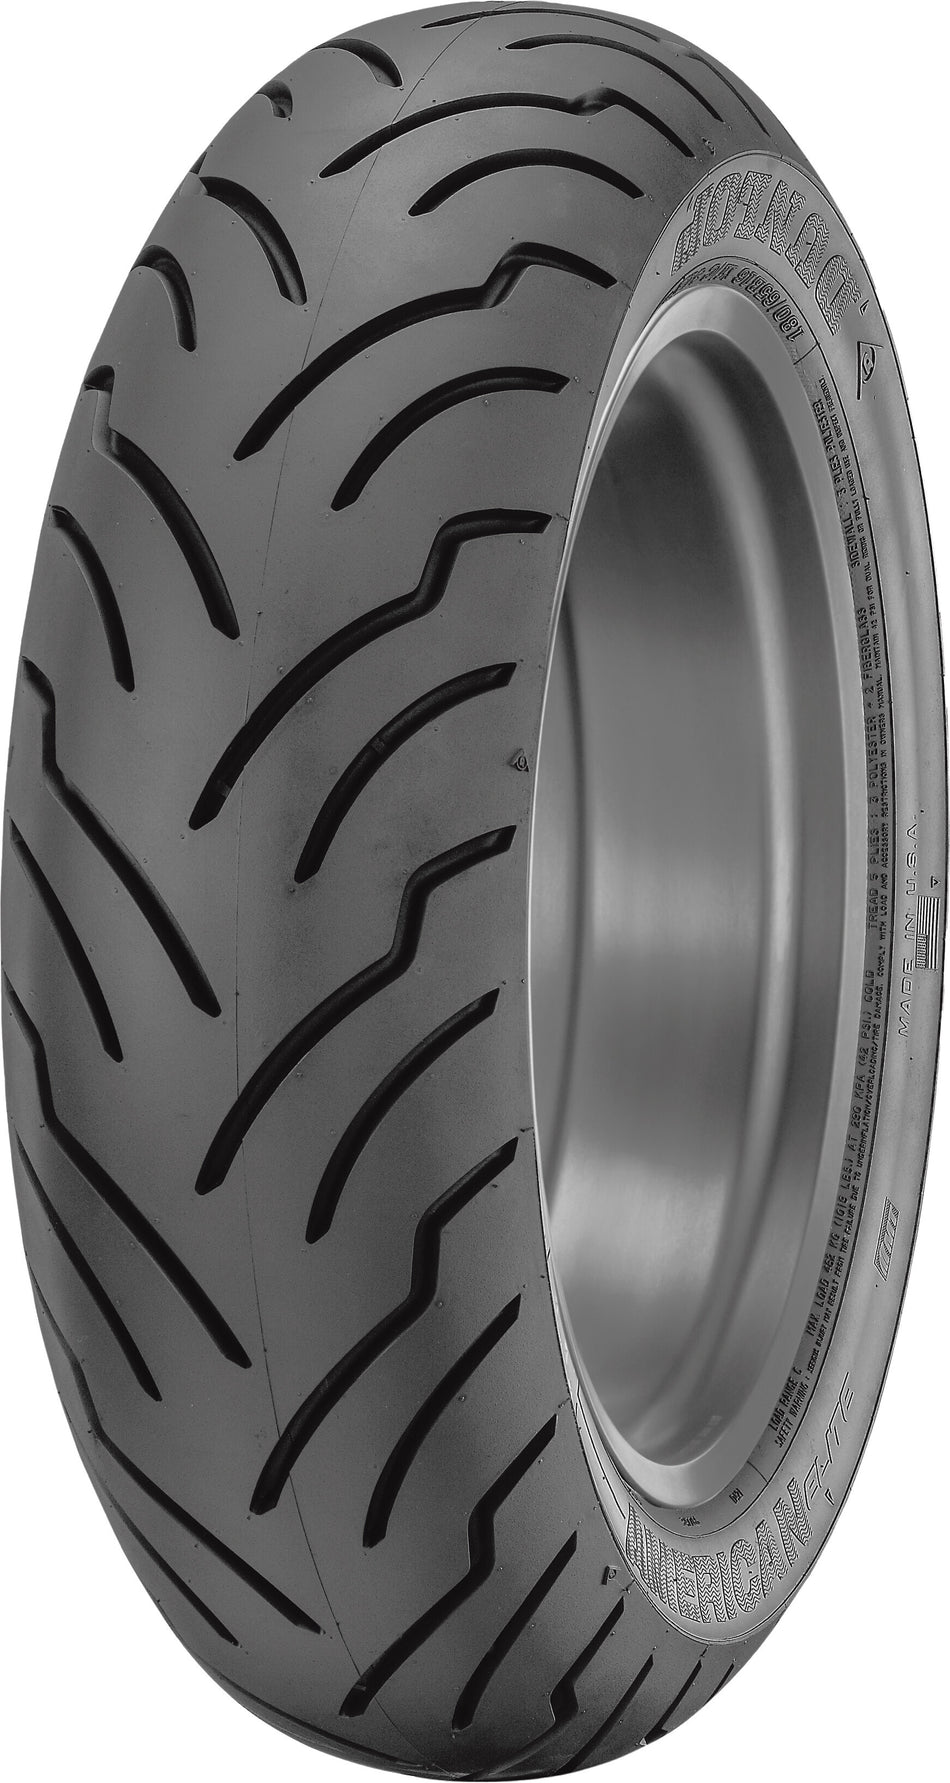 DUNLOP Tire American Elite Rear 240/40r18 79v Radial Tl 45131730